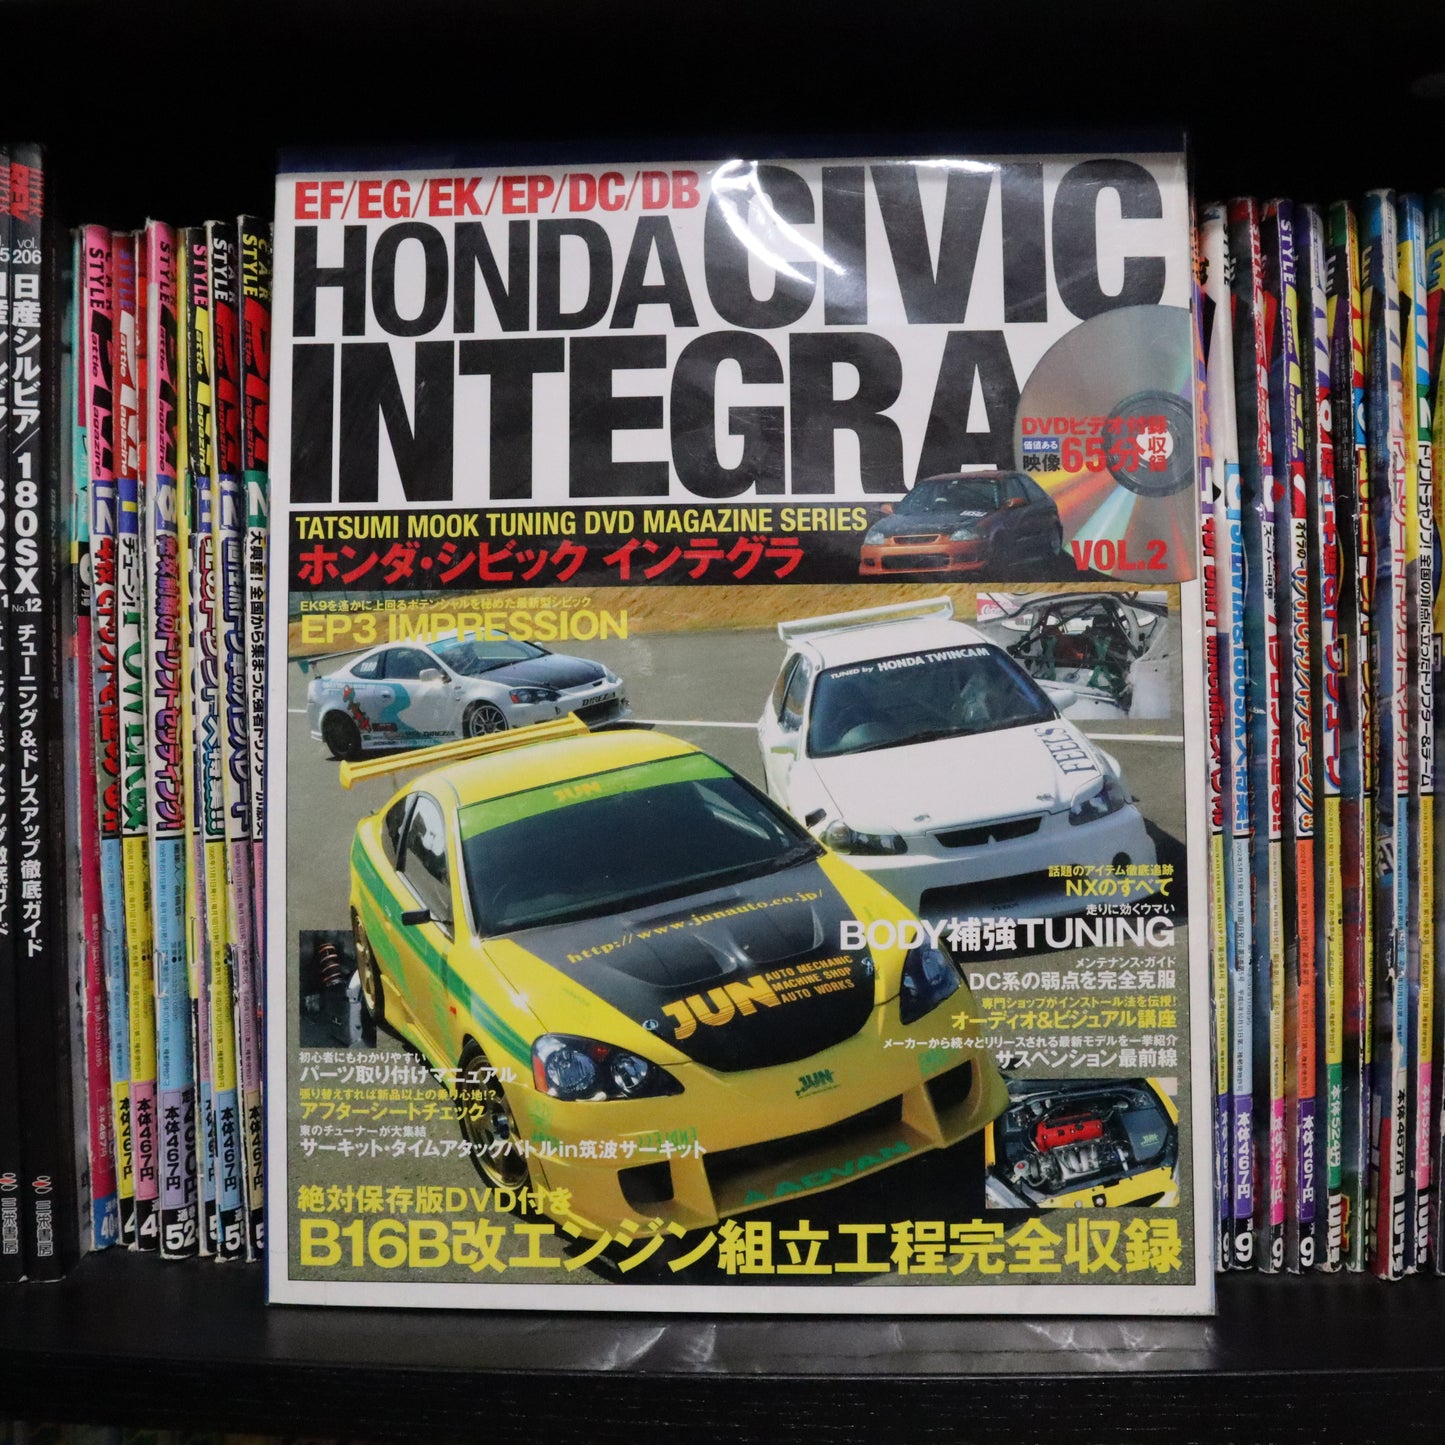 Honda Civic/Integra Tatsumi Mook Tuning DVD Magazine Series